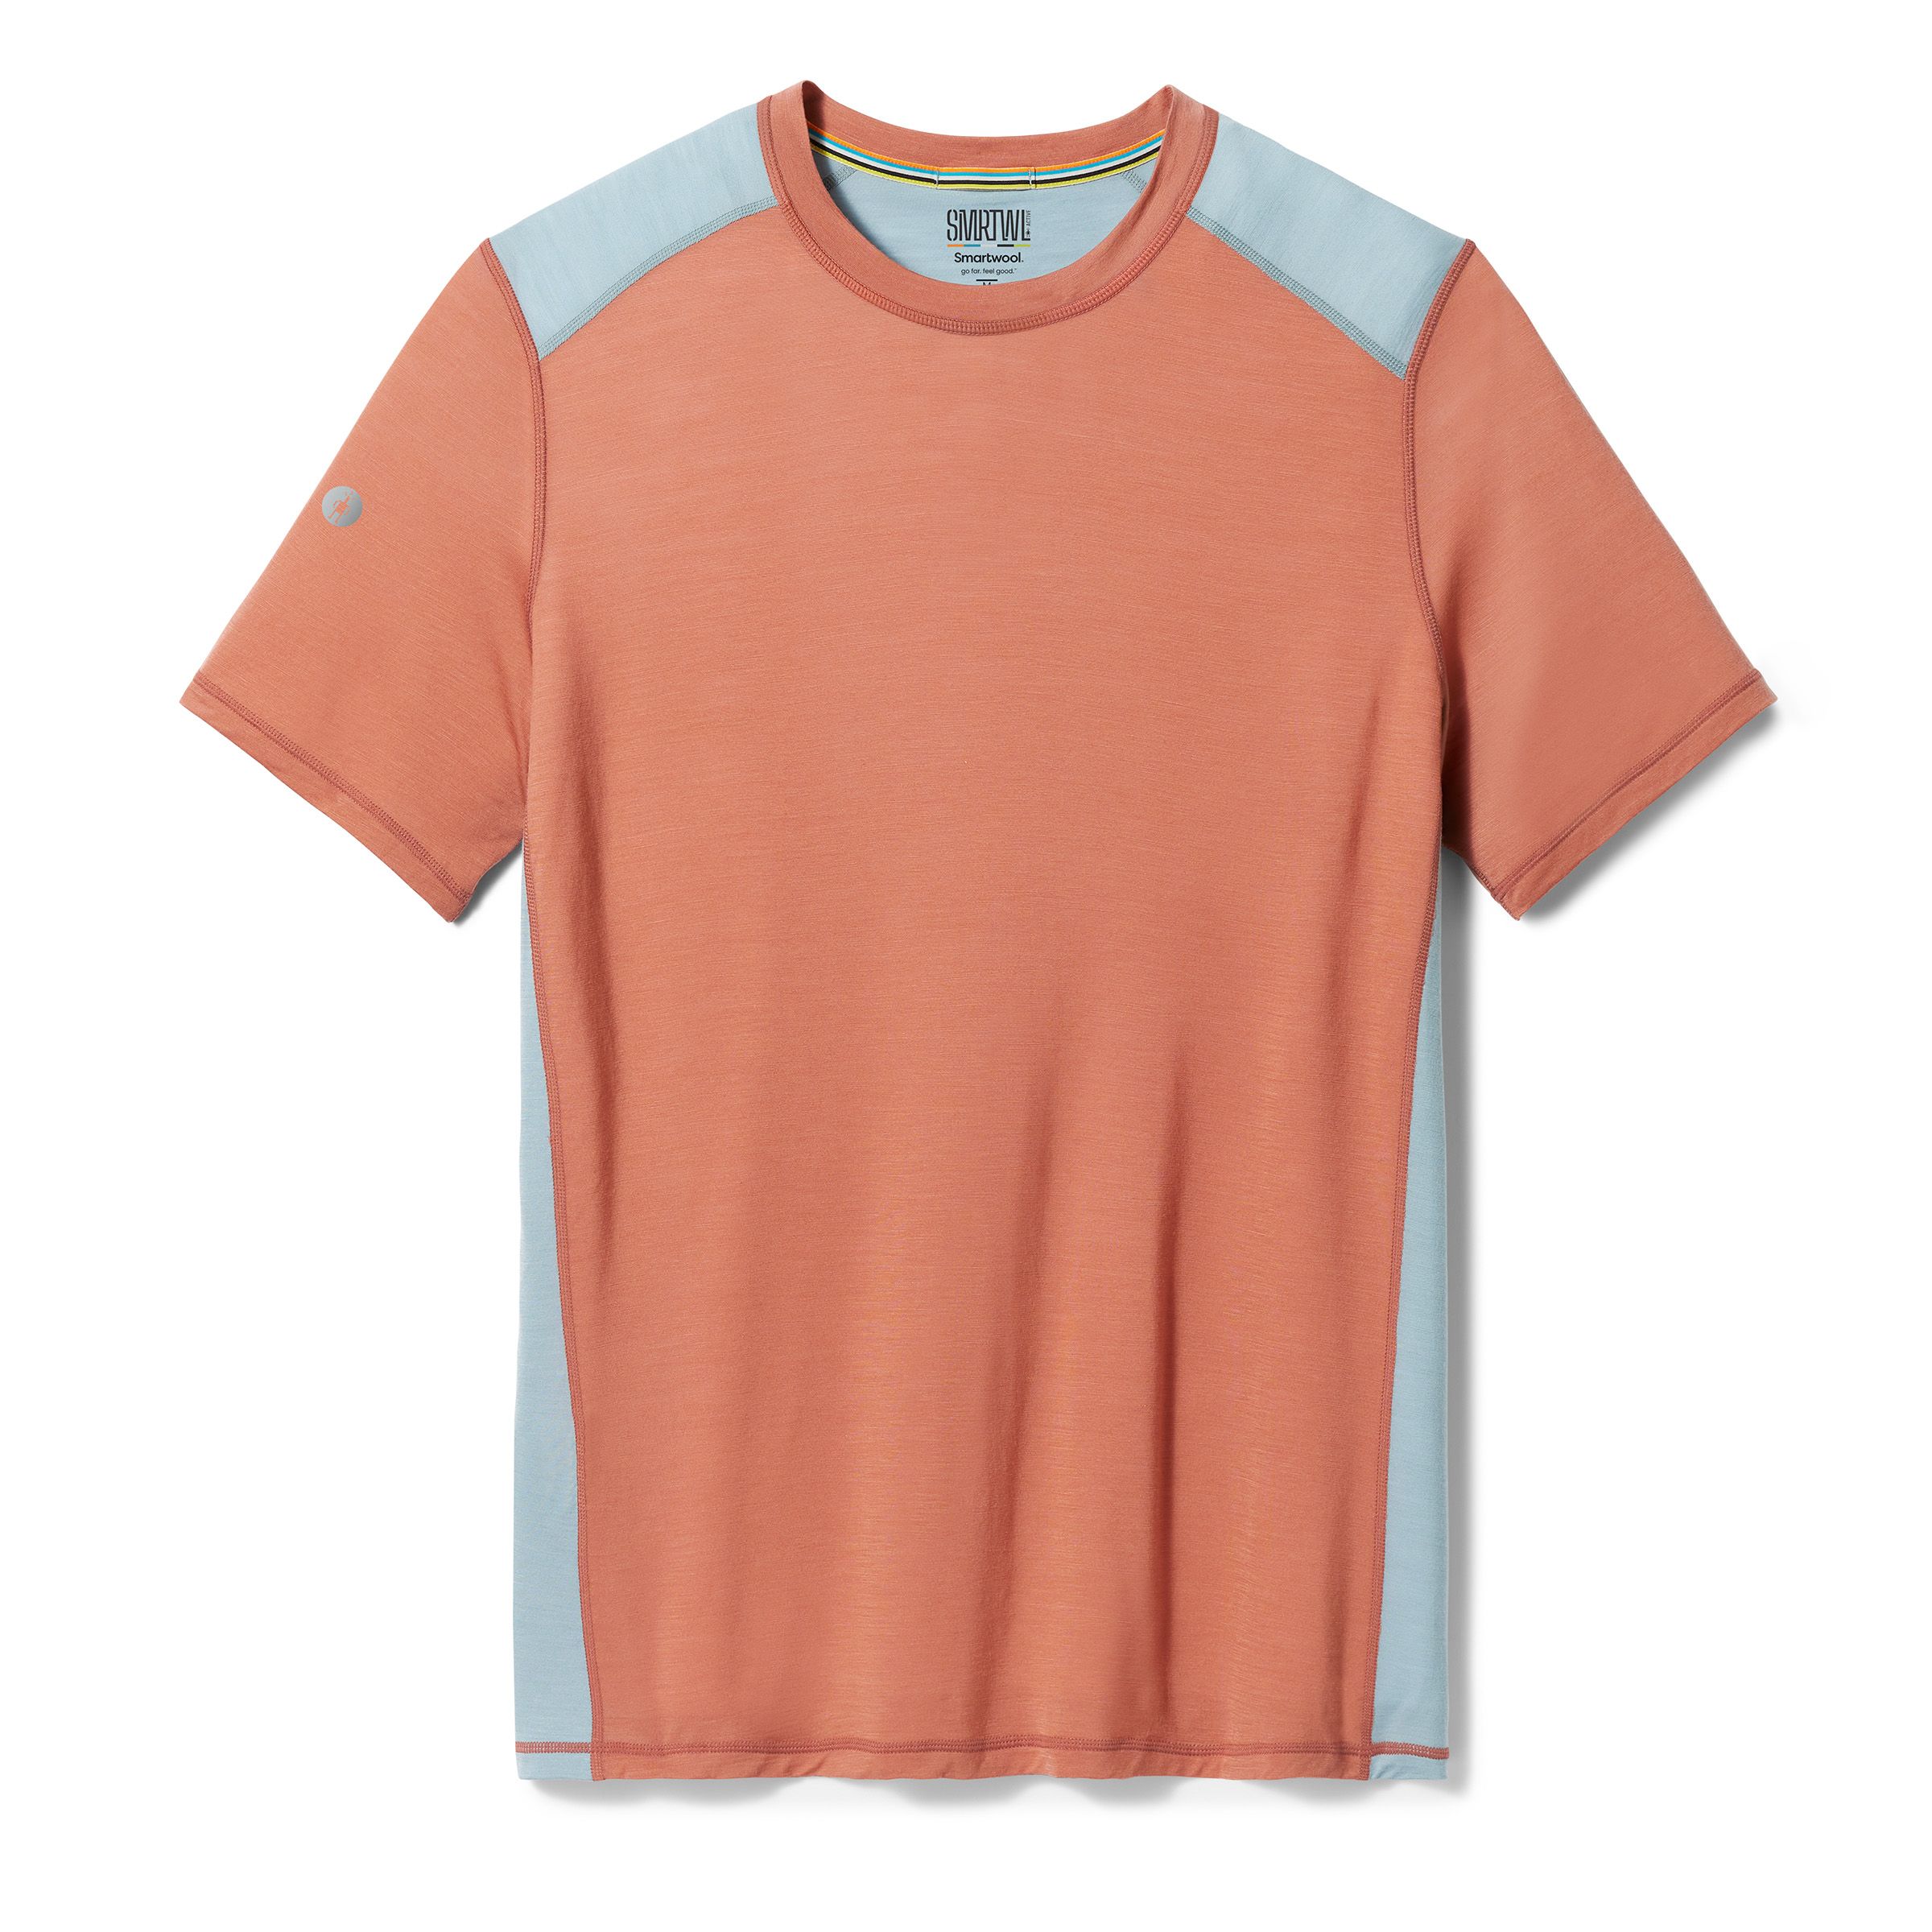 Lululemon Athletica Color Block Stripes Gray Active T-Shirt Size